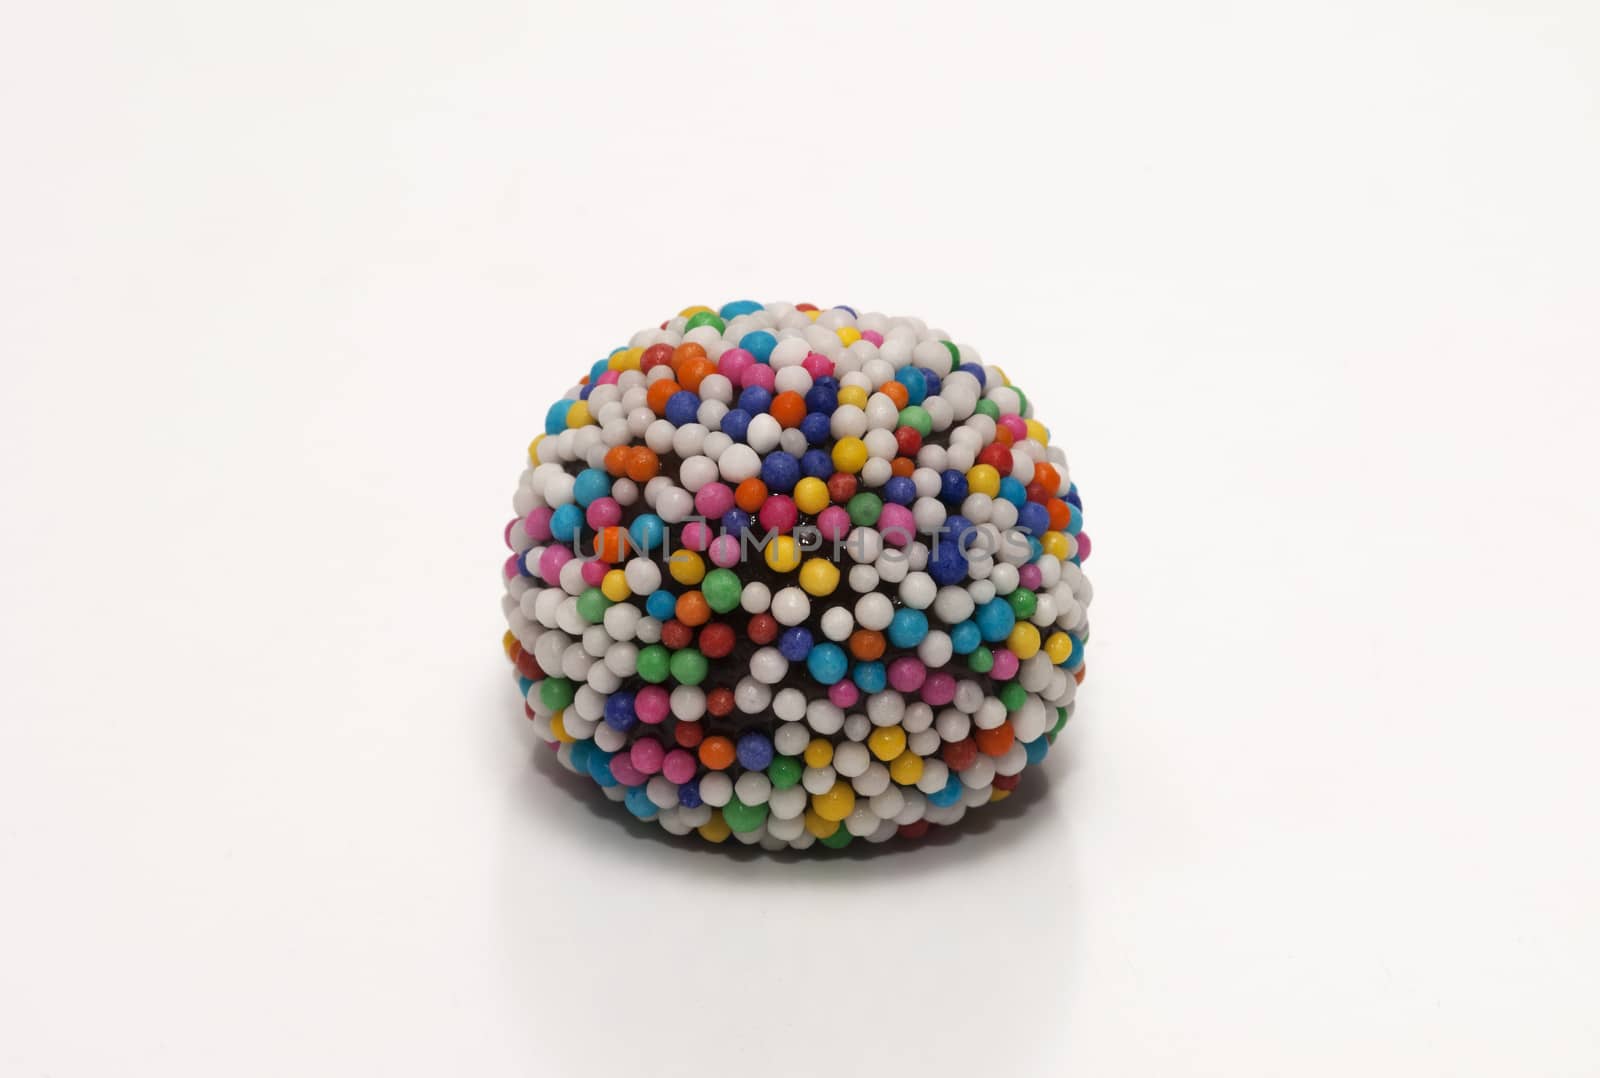 Brazilian Sweet - Brigadeiro / Brigadeiro with colorful beads